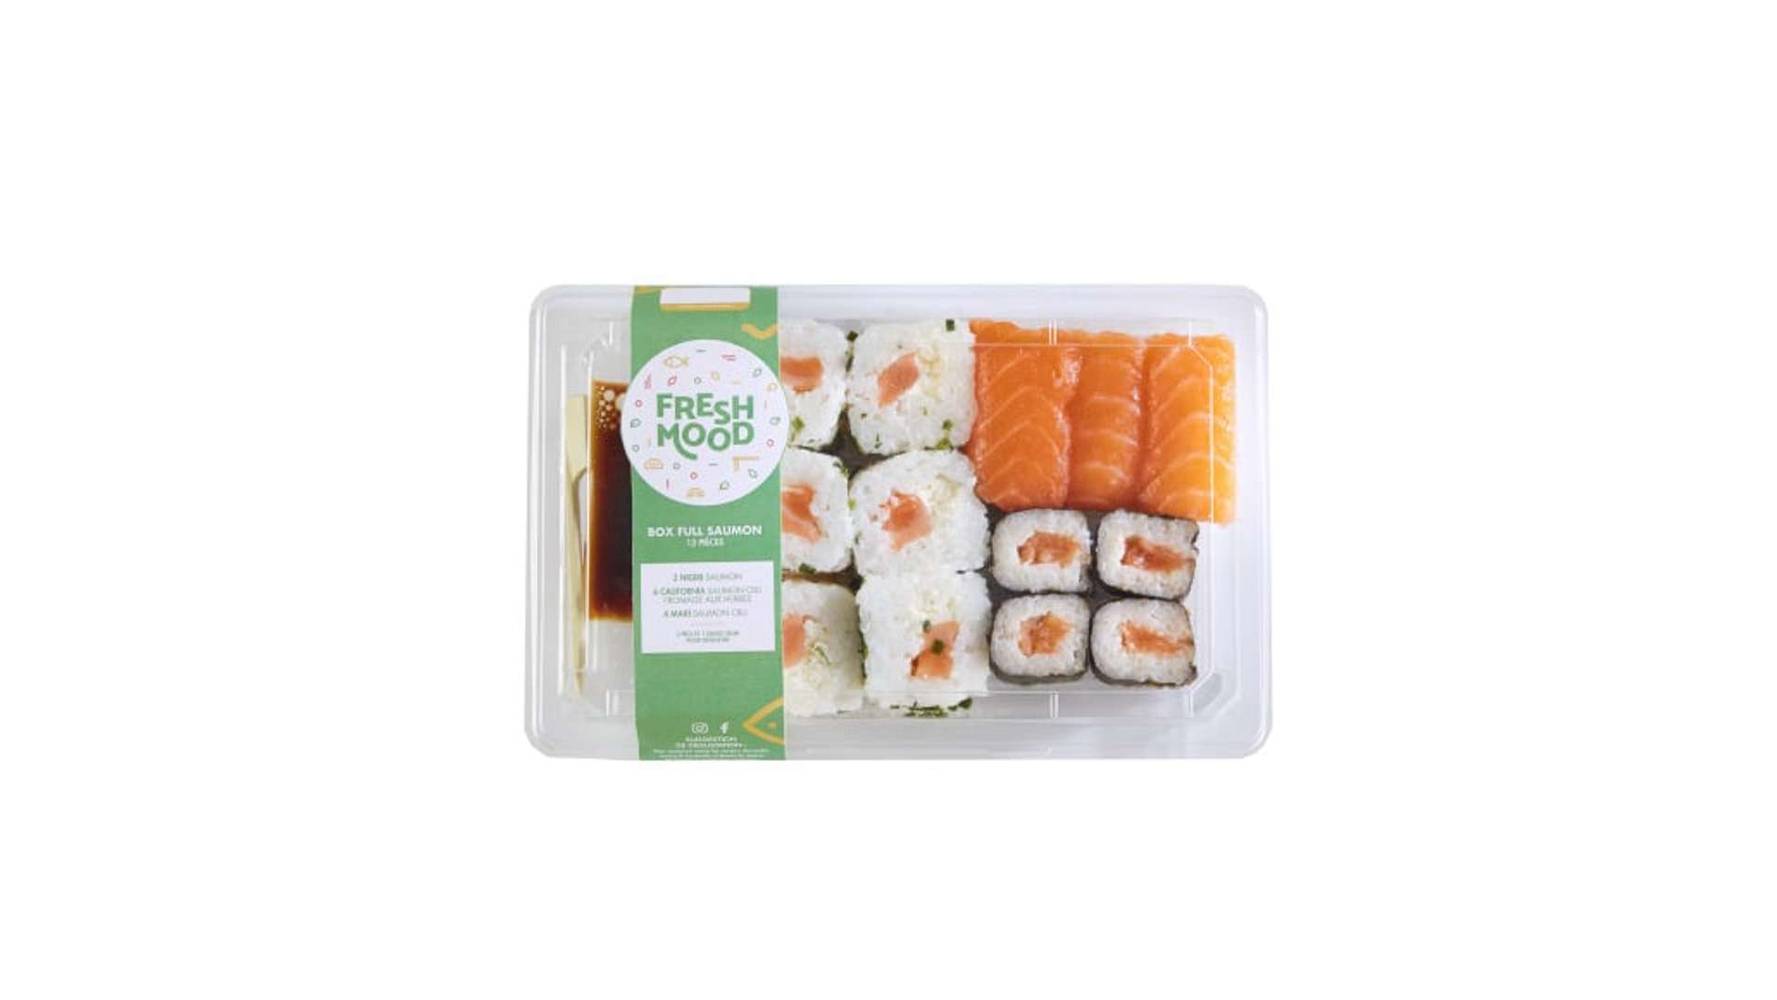 2B FRESH Box full saumon, 3 nigiri saumon, 6 california saumon cru cheese et 4 maki saumon cru, accompagné d une sauce soj Assortiment de 13 sushis à base de riz